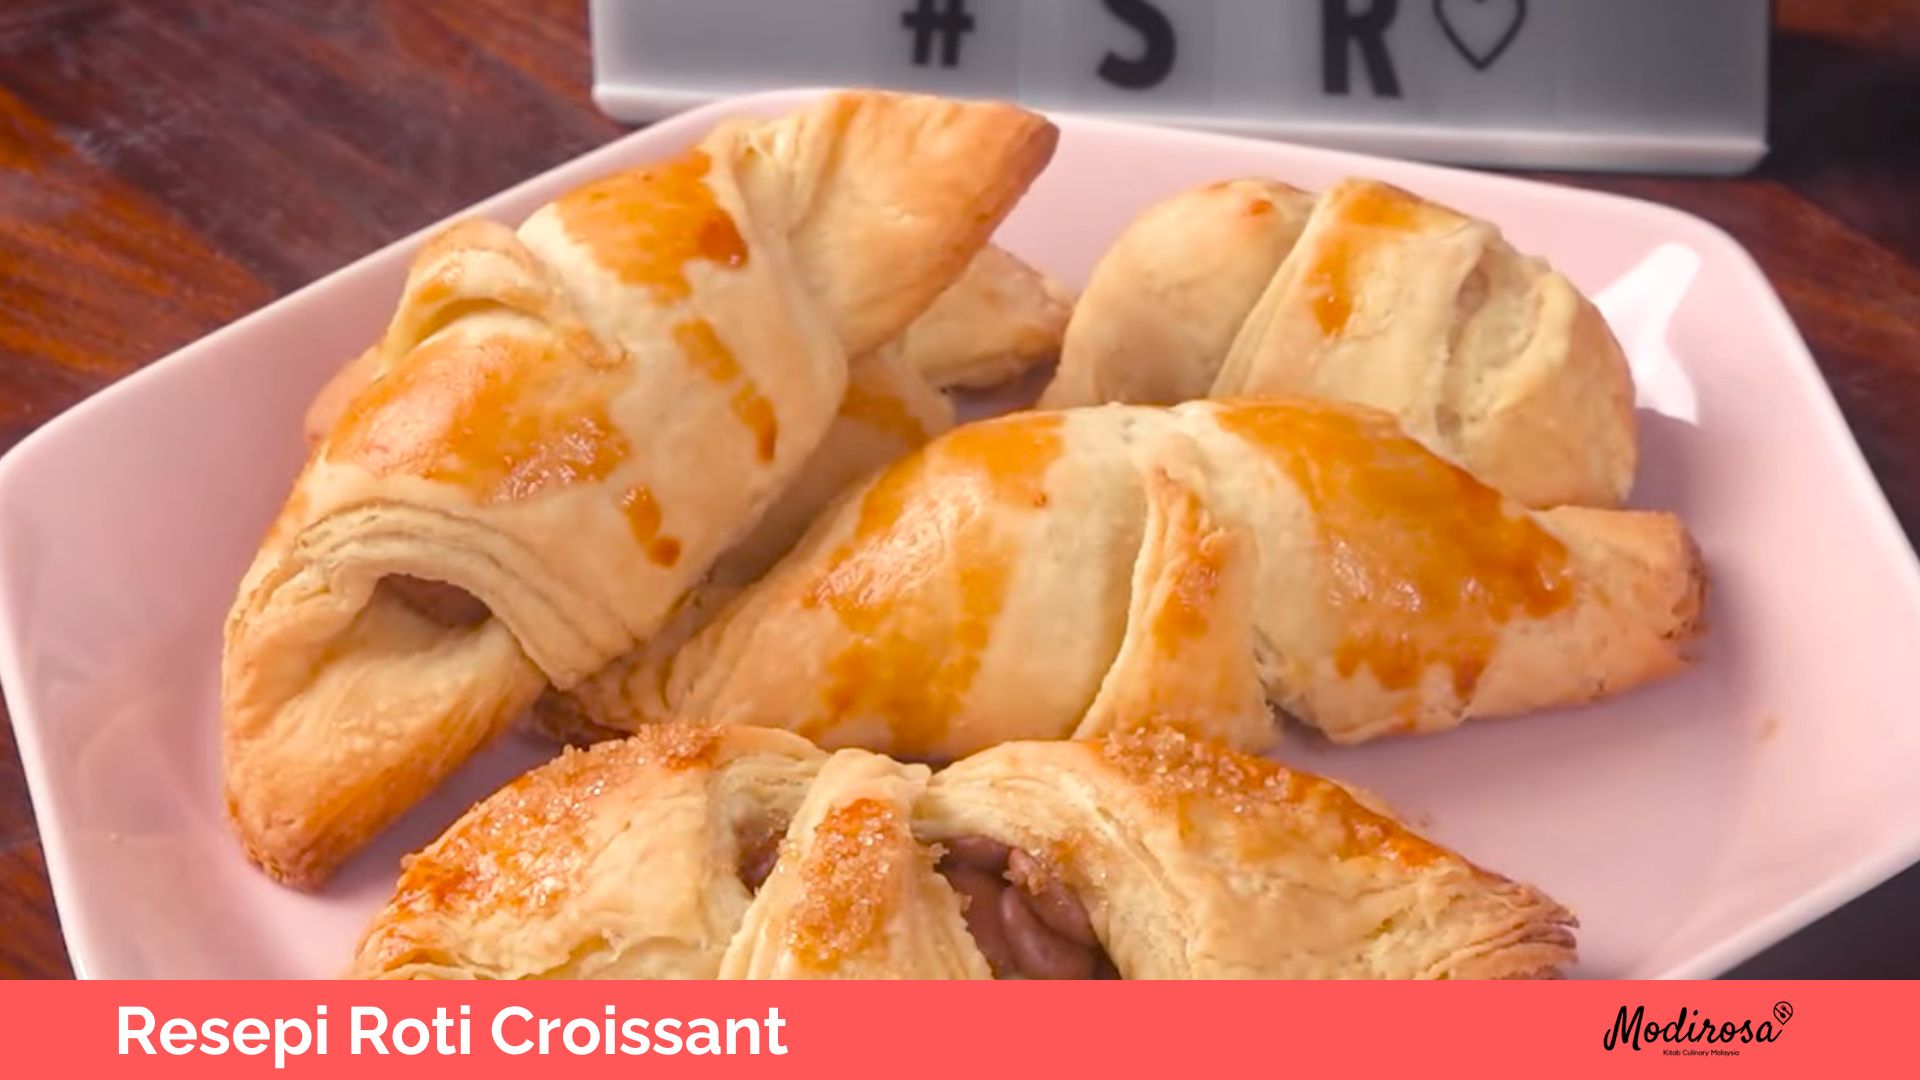 Resepi Roti Croissant